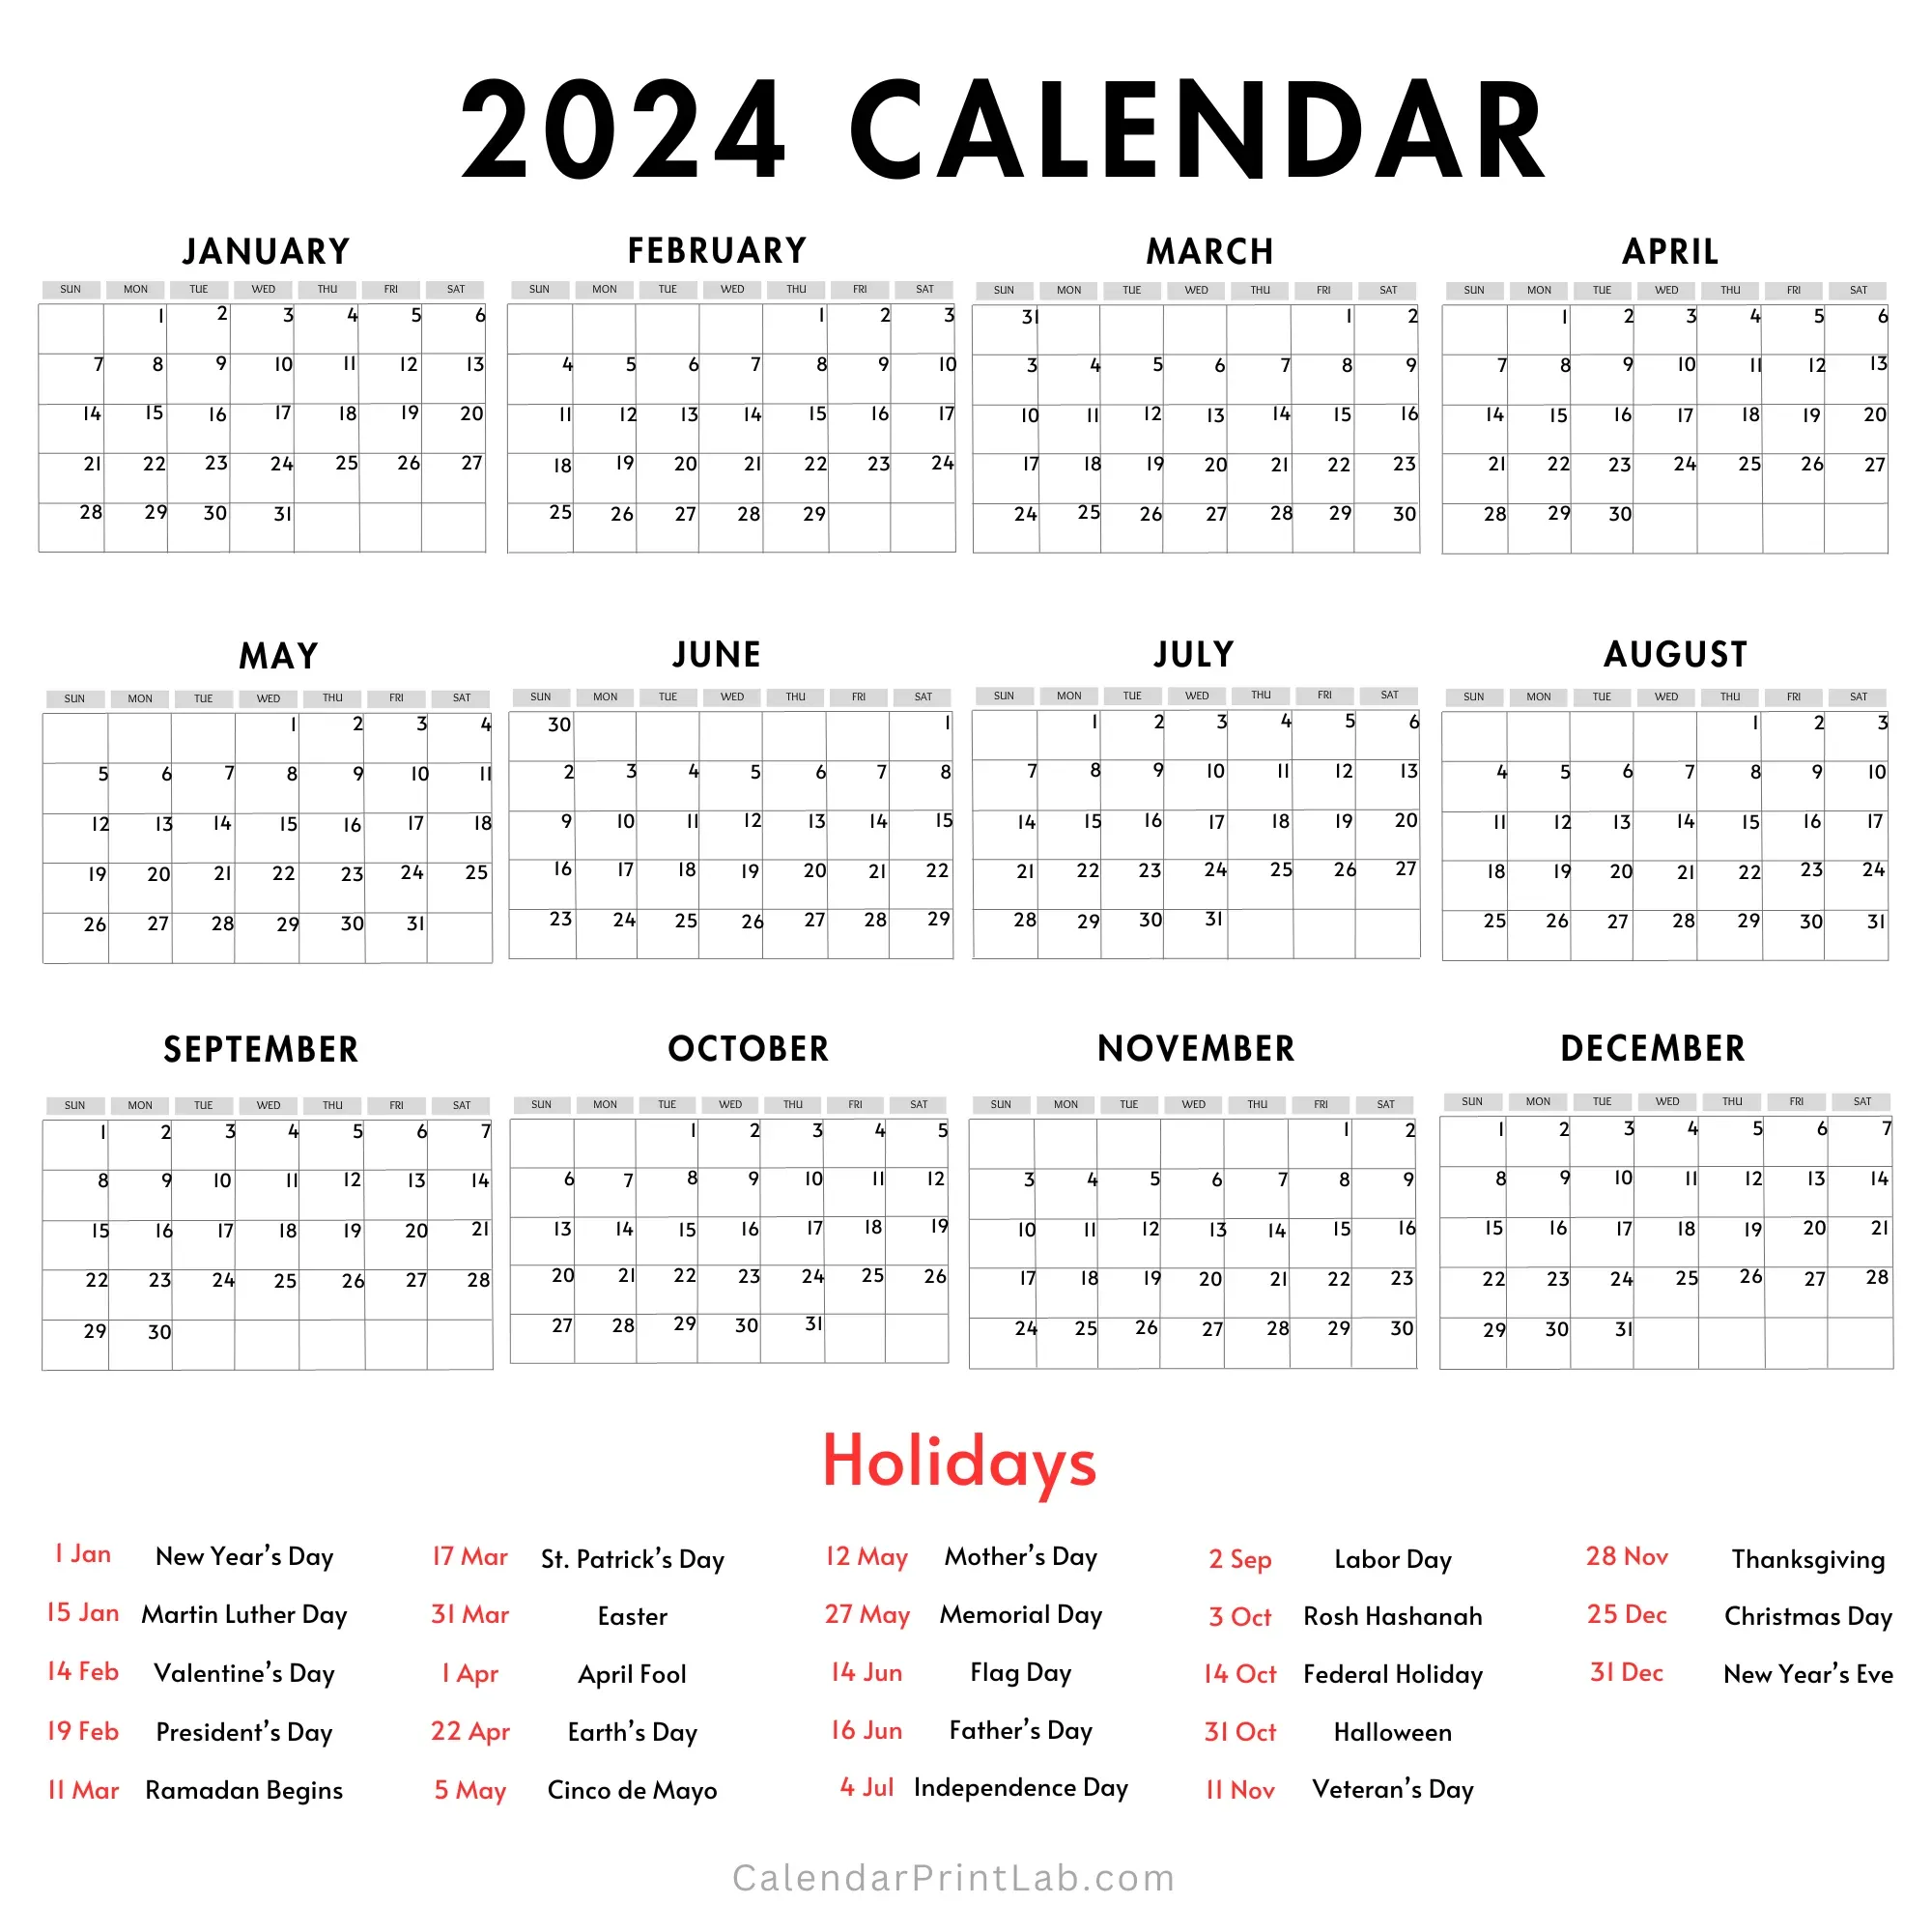 2024 calendar printable with holidays